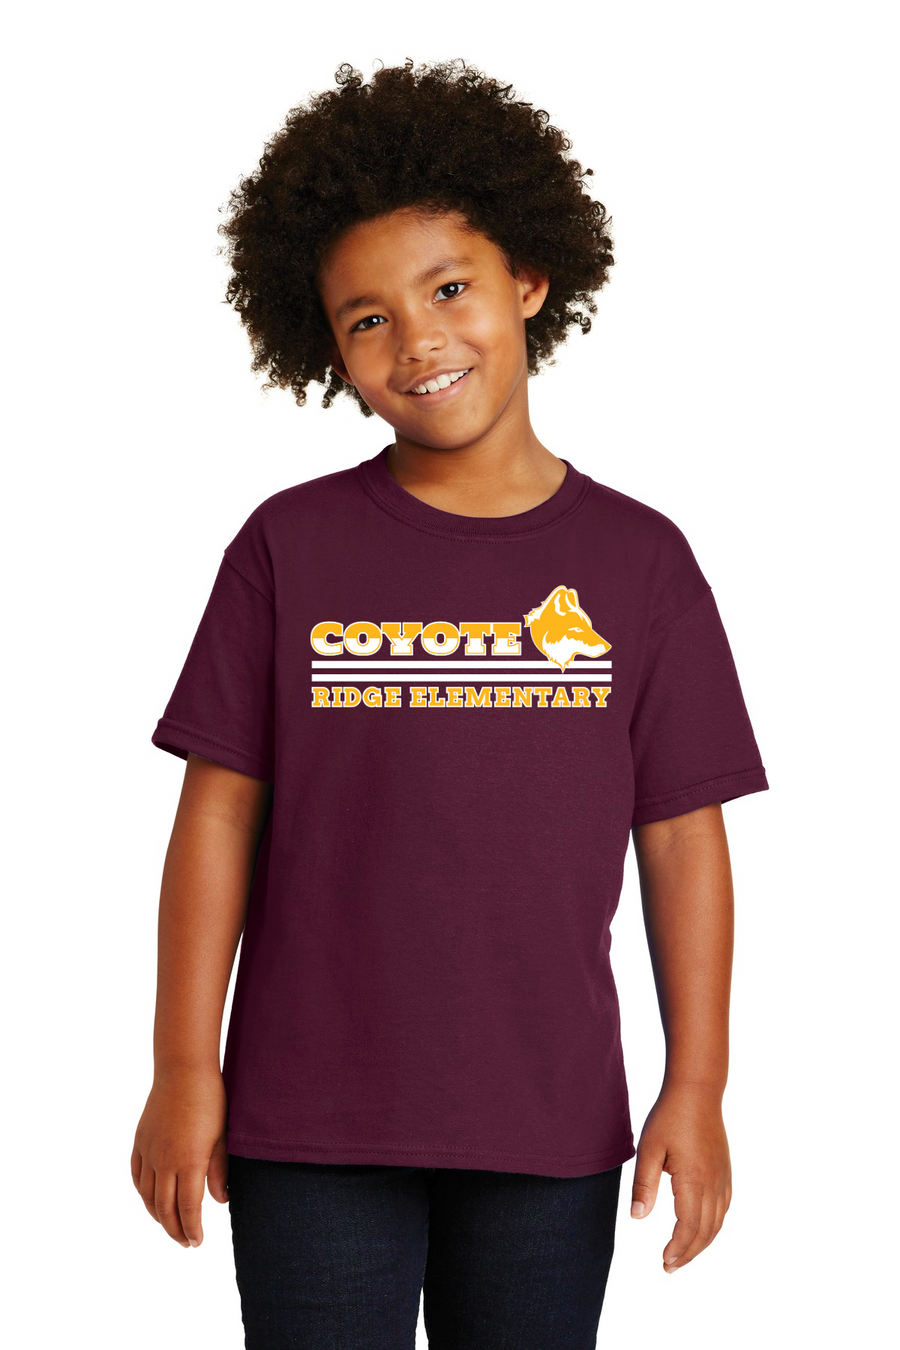 Coyote Ridge Elementary-Unisex T-Shirt